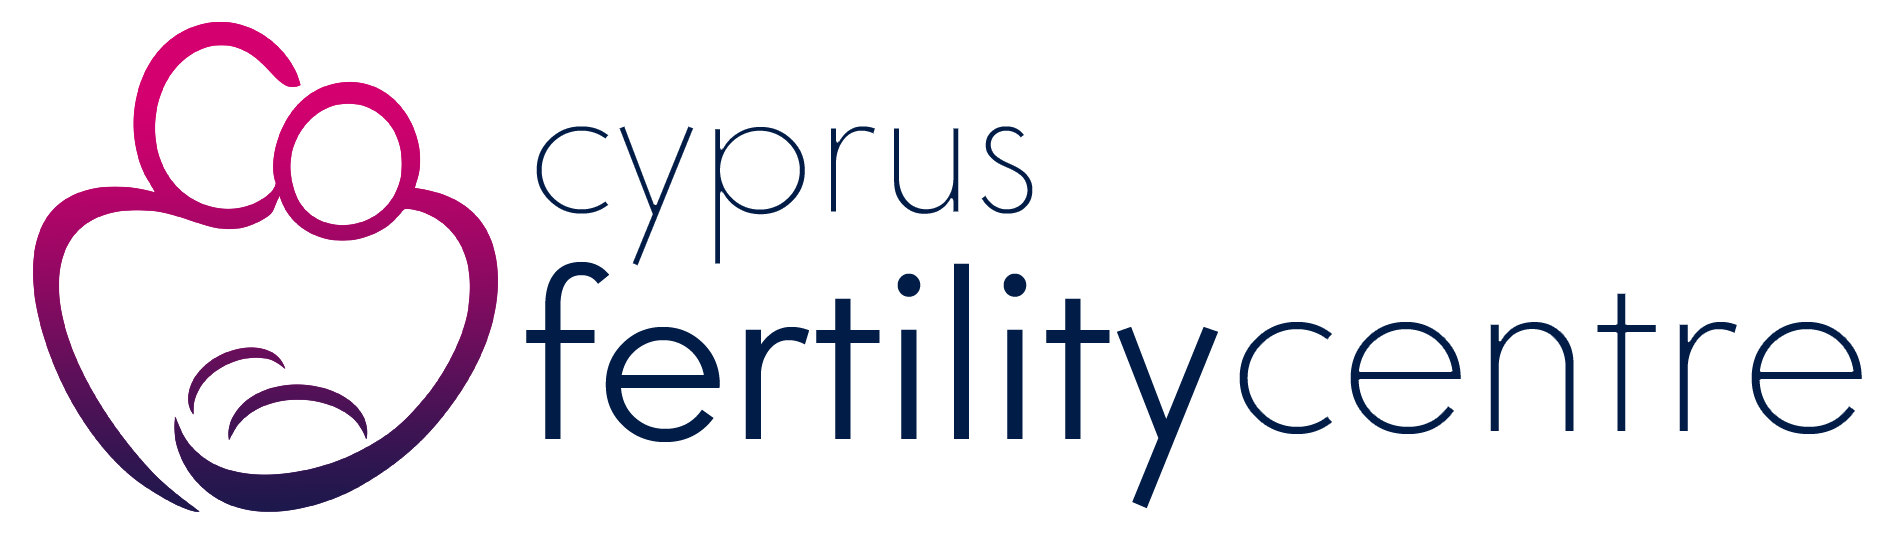 Cyprus Fertility Centre